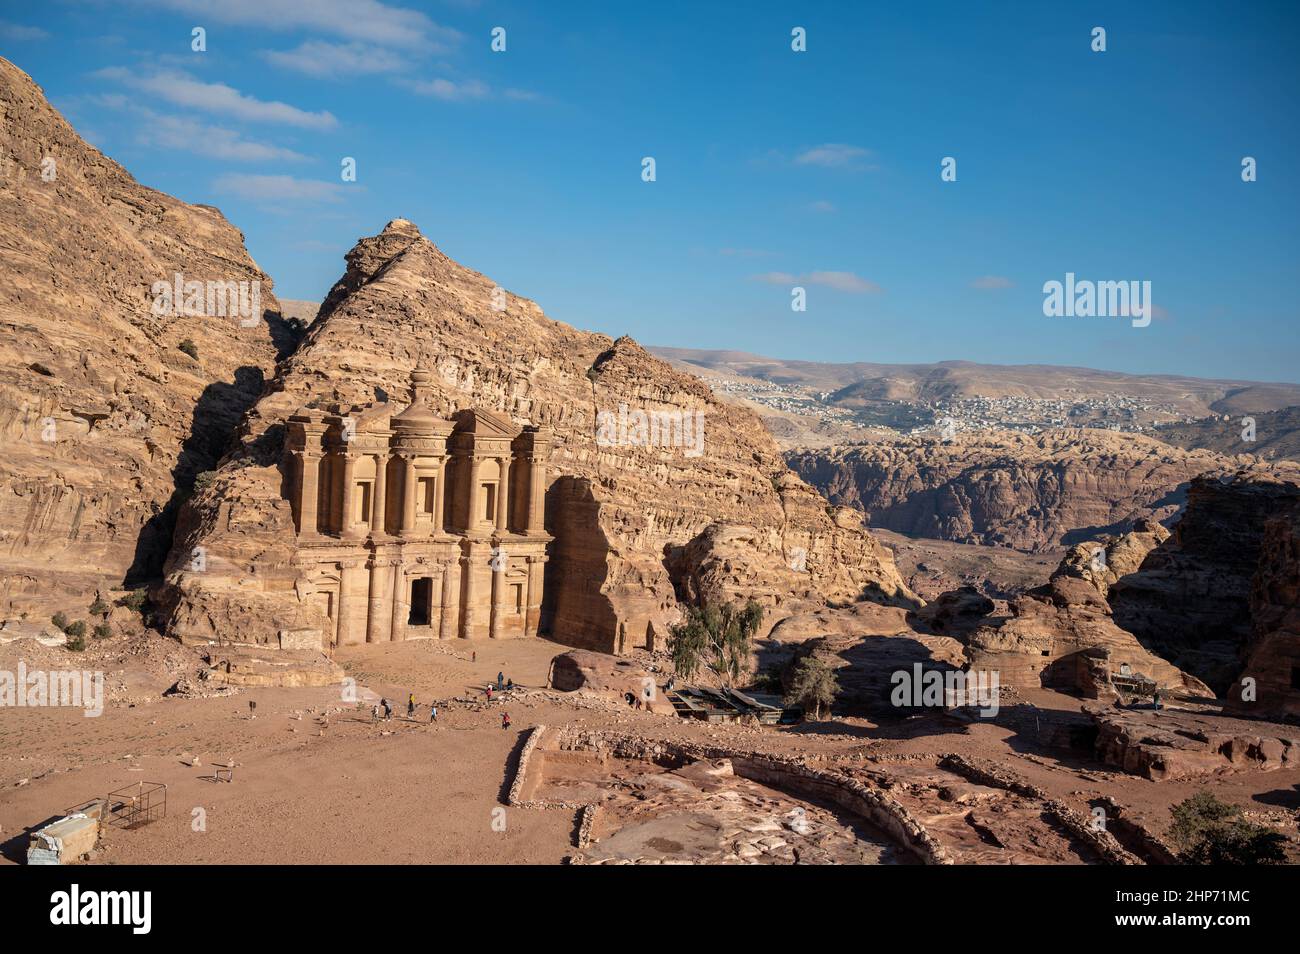 The Monastery, Petra, Jordan Stock Photo